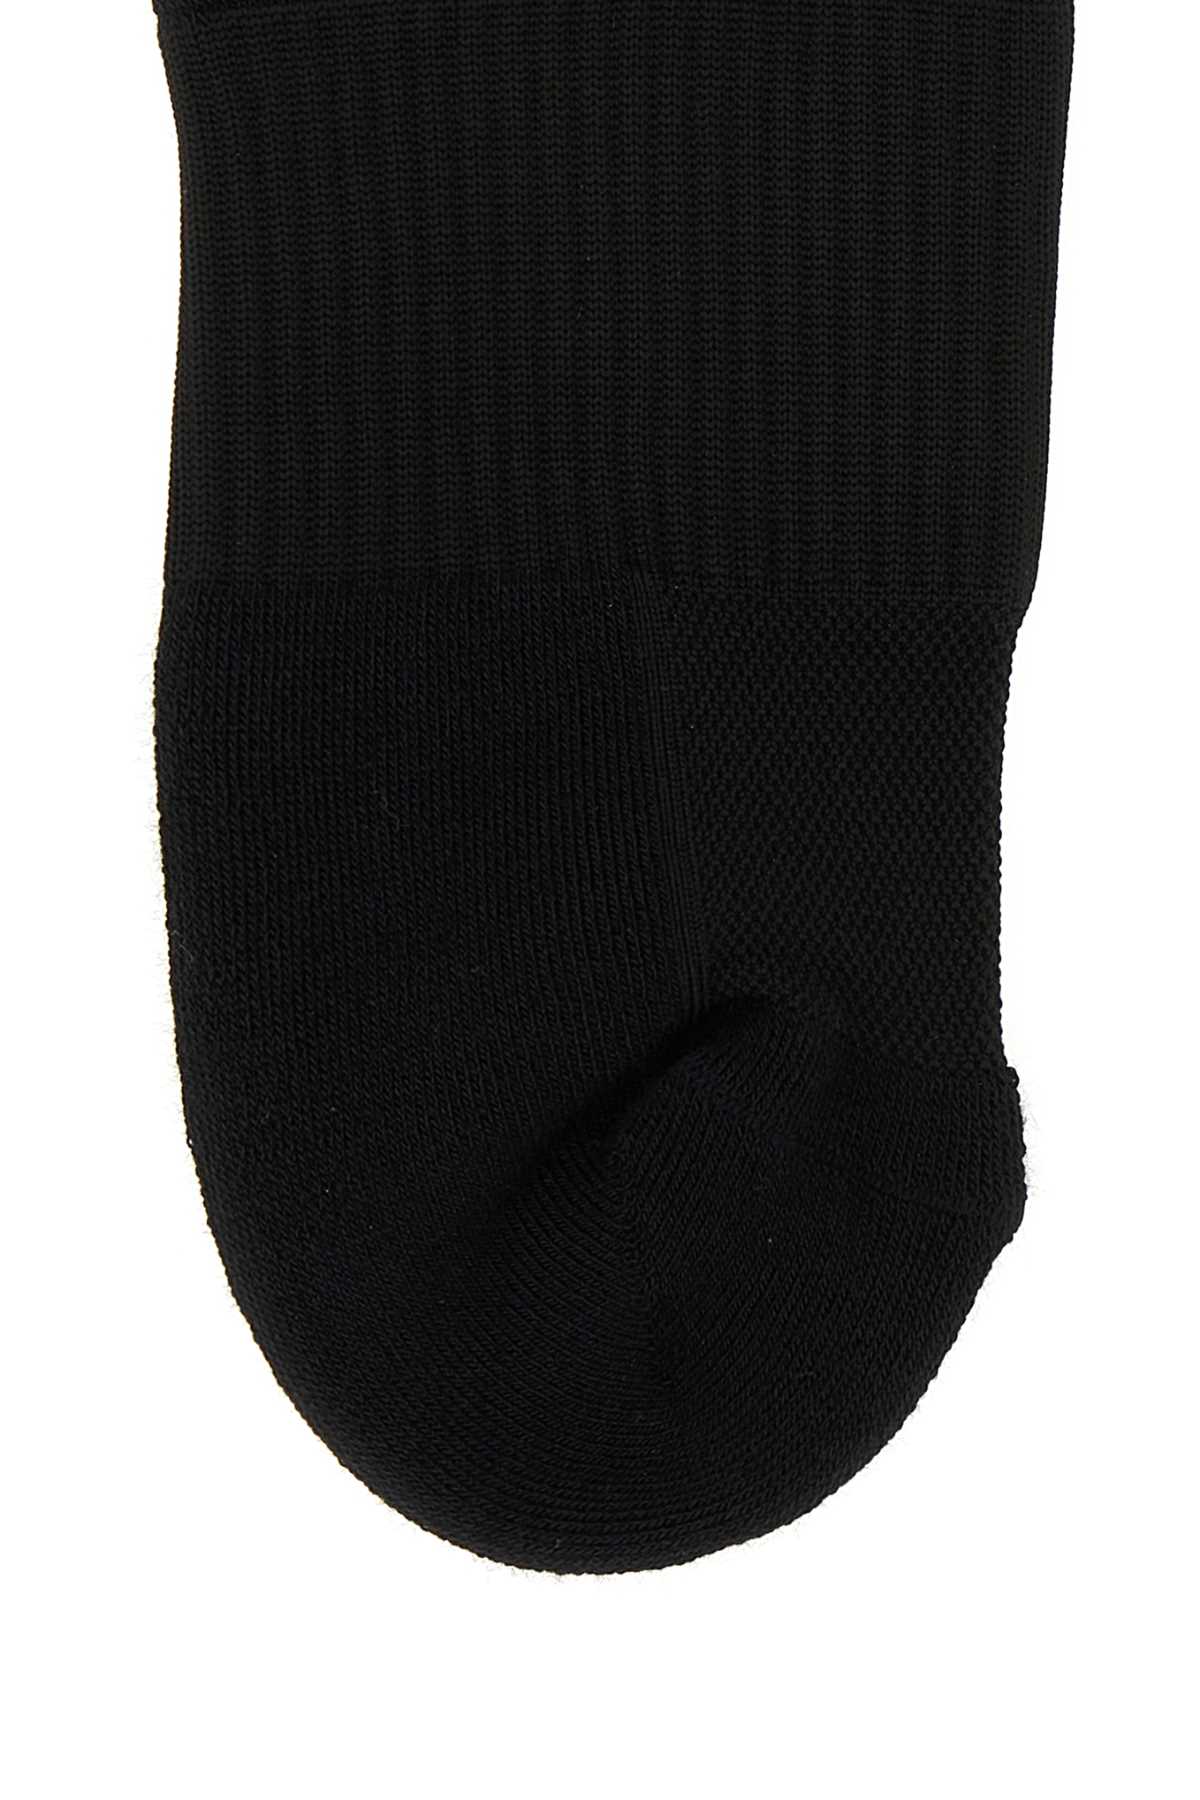 Thom Browne Black Stretch Cotton Blend Socks In 001